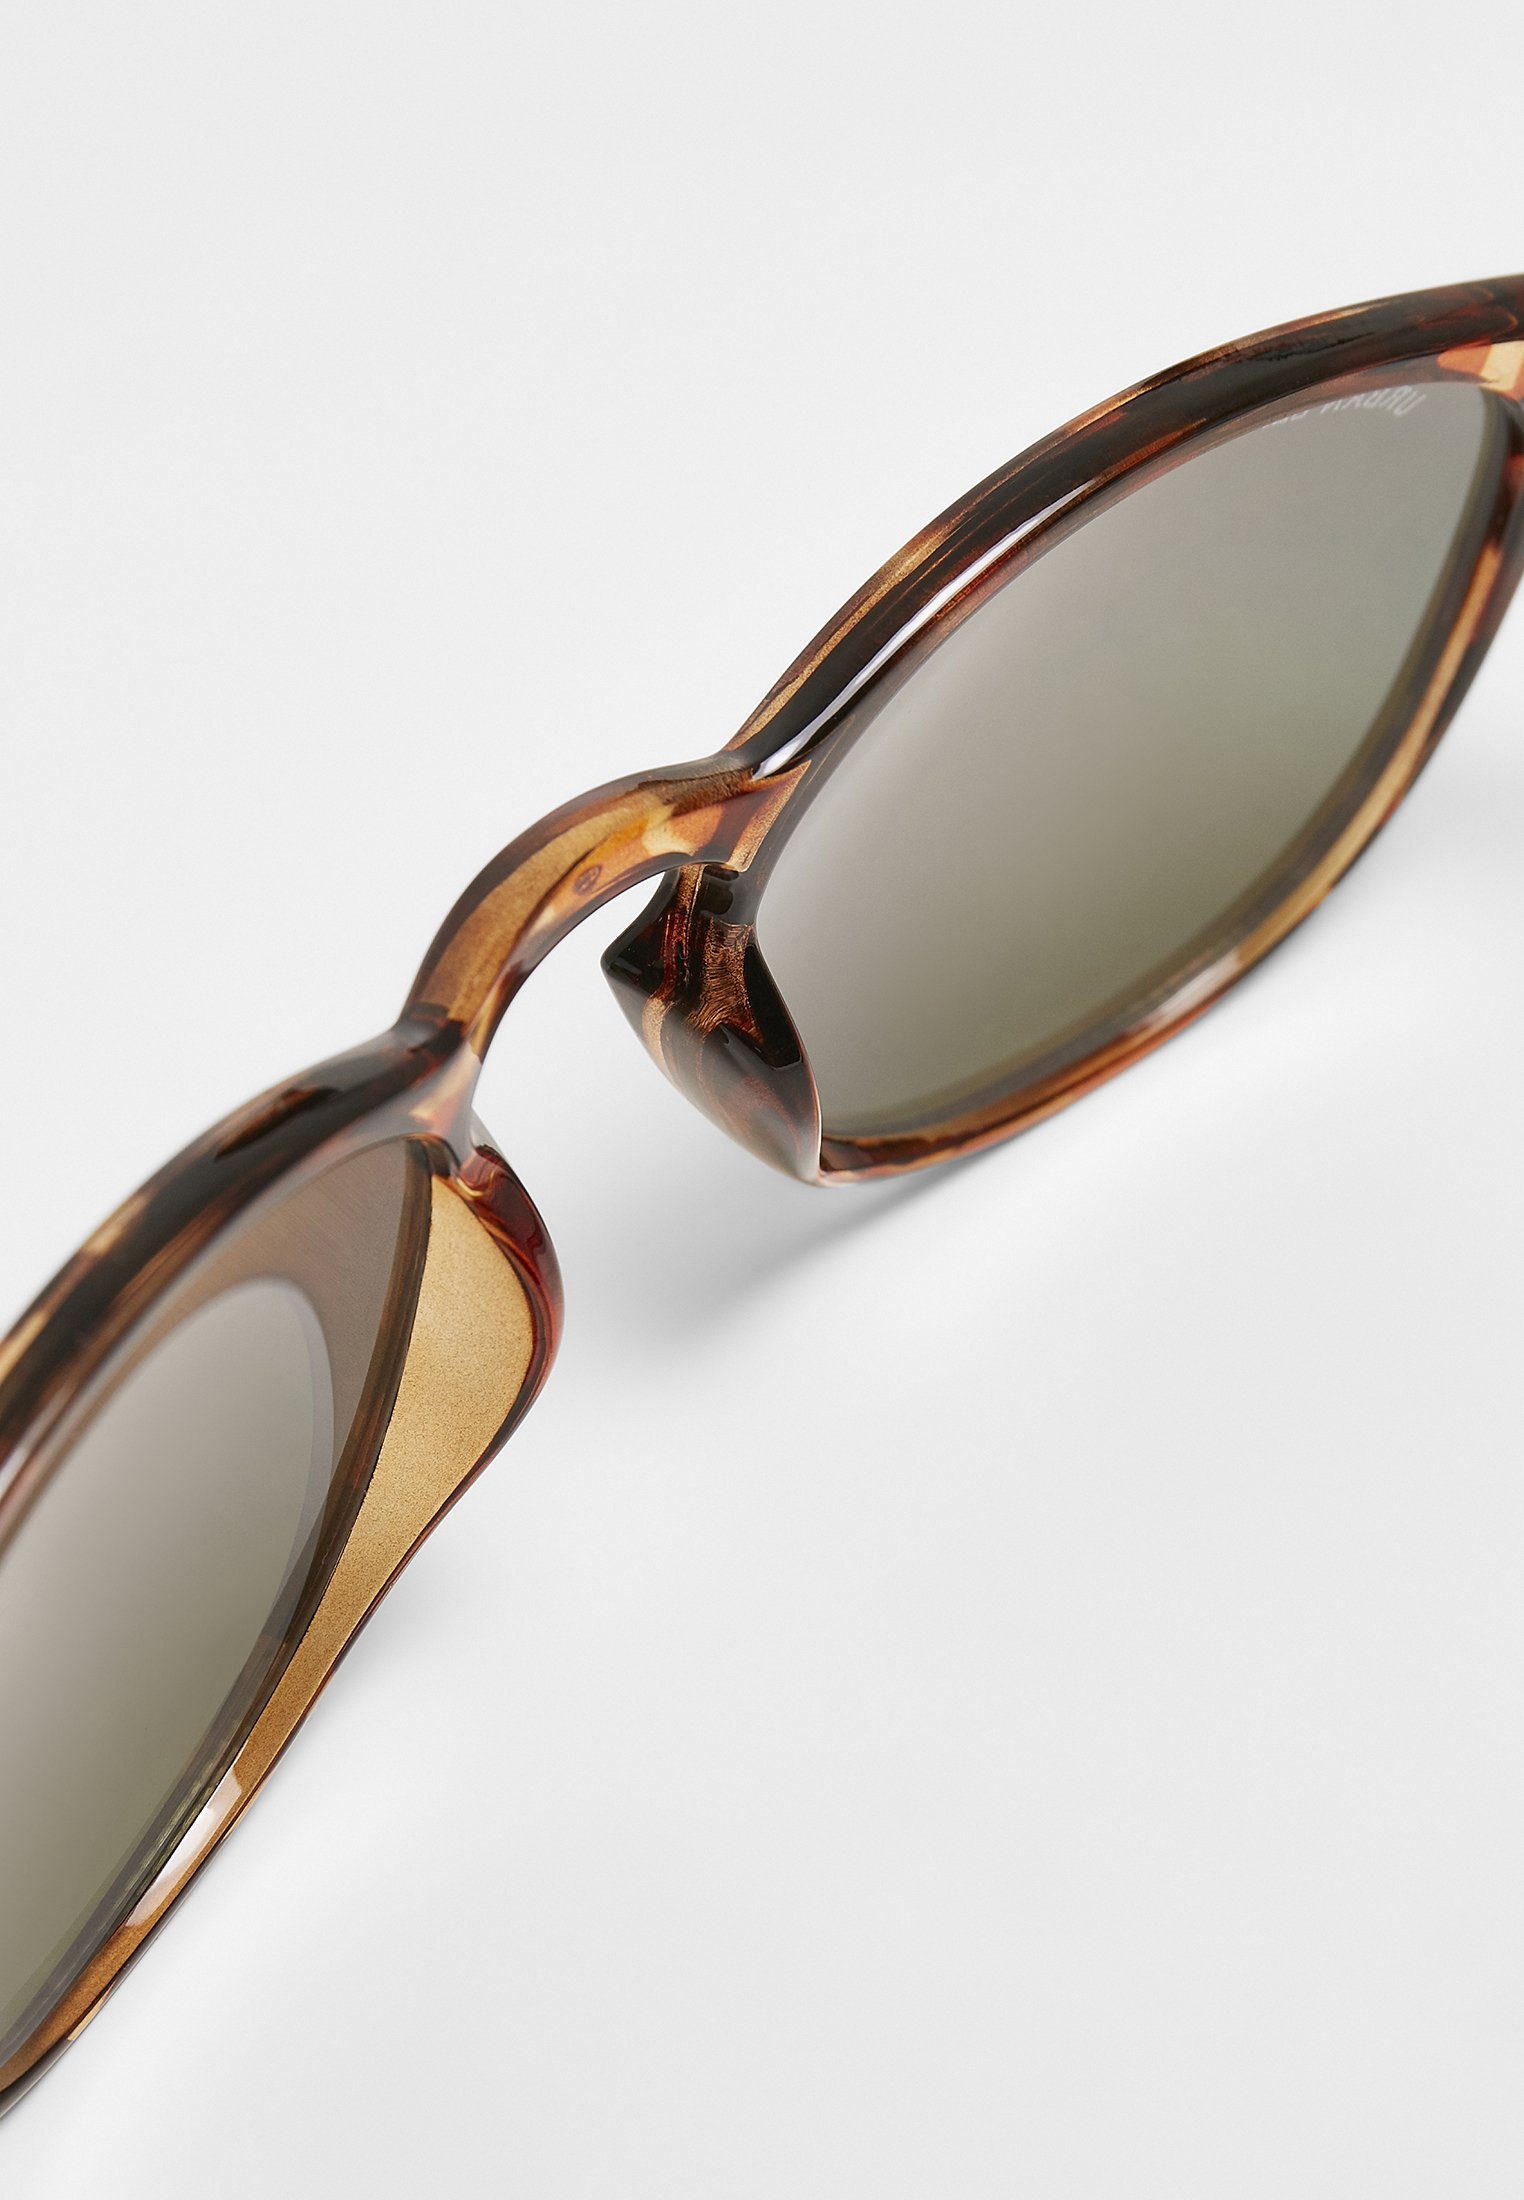 Accessoires leo/orange Sunglasses CLASSICS URBAN 106 UC Sonnenbrille brown